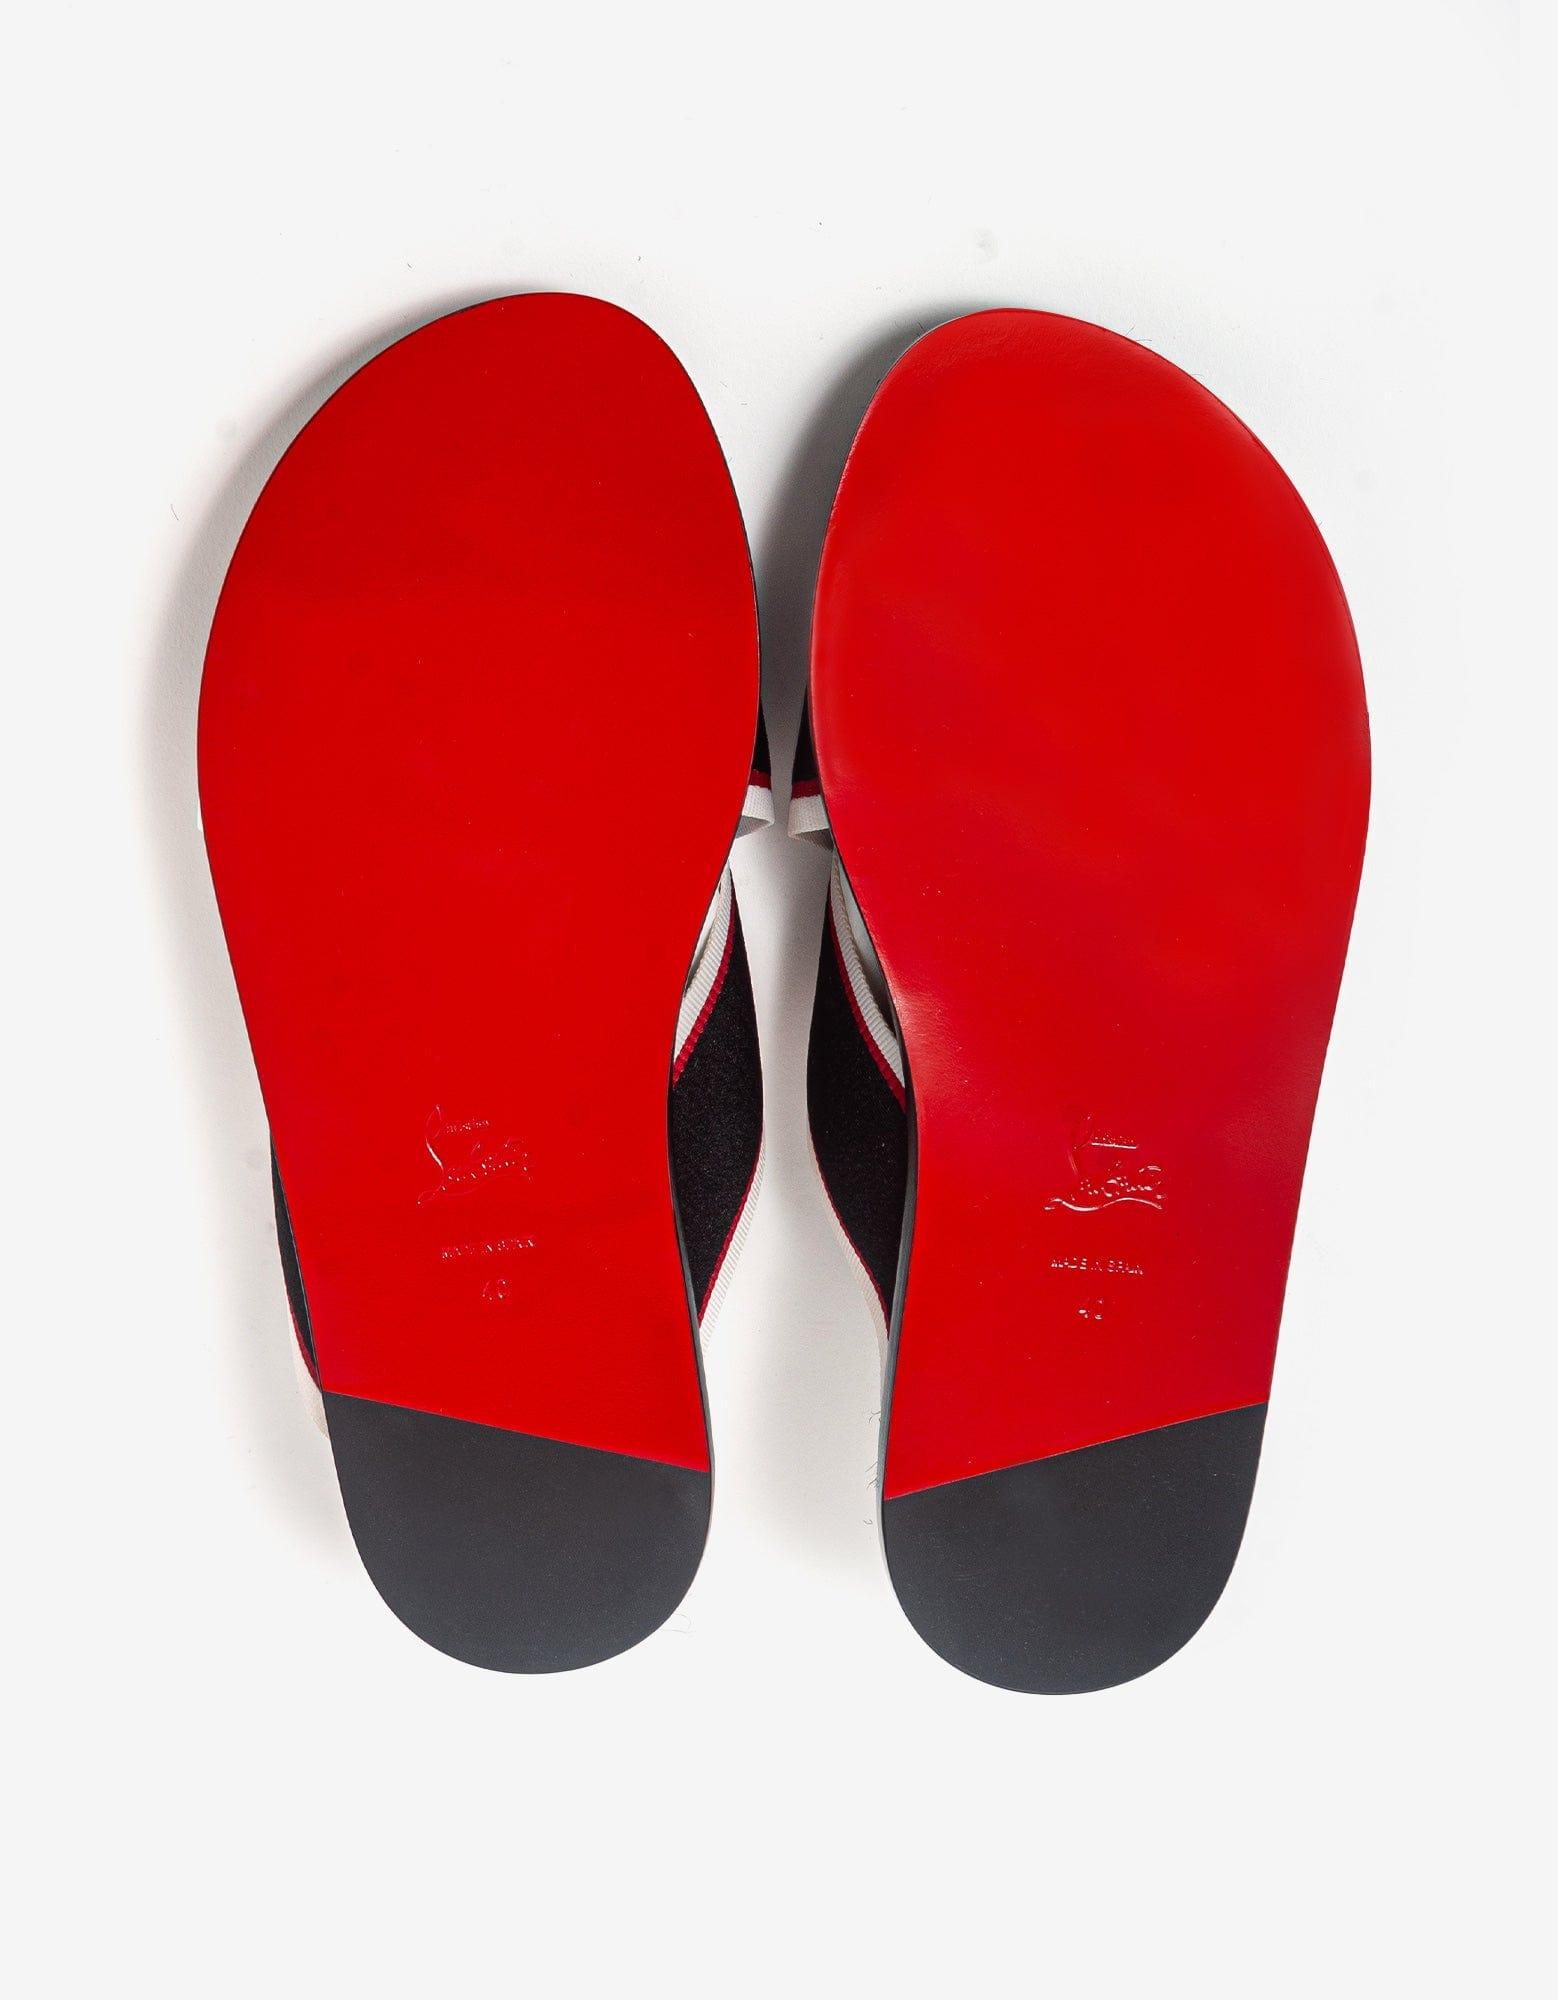 louis vuitton red bottom sandals